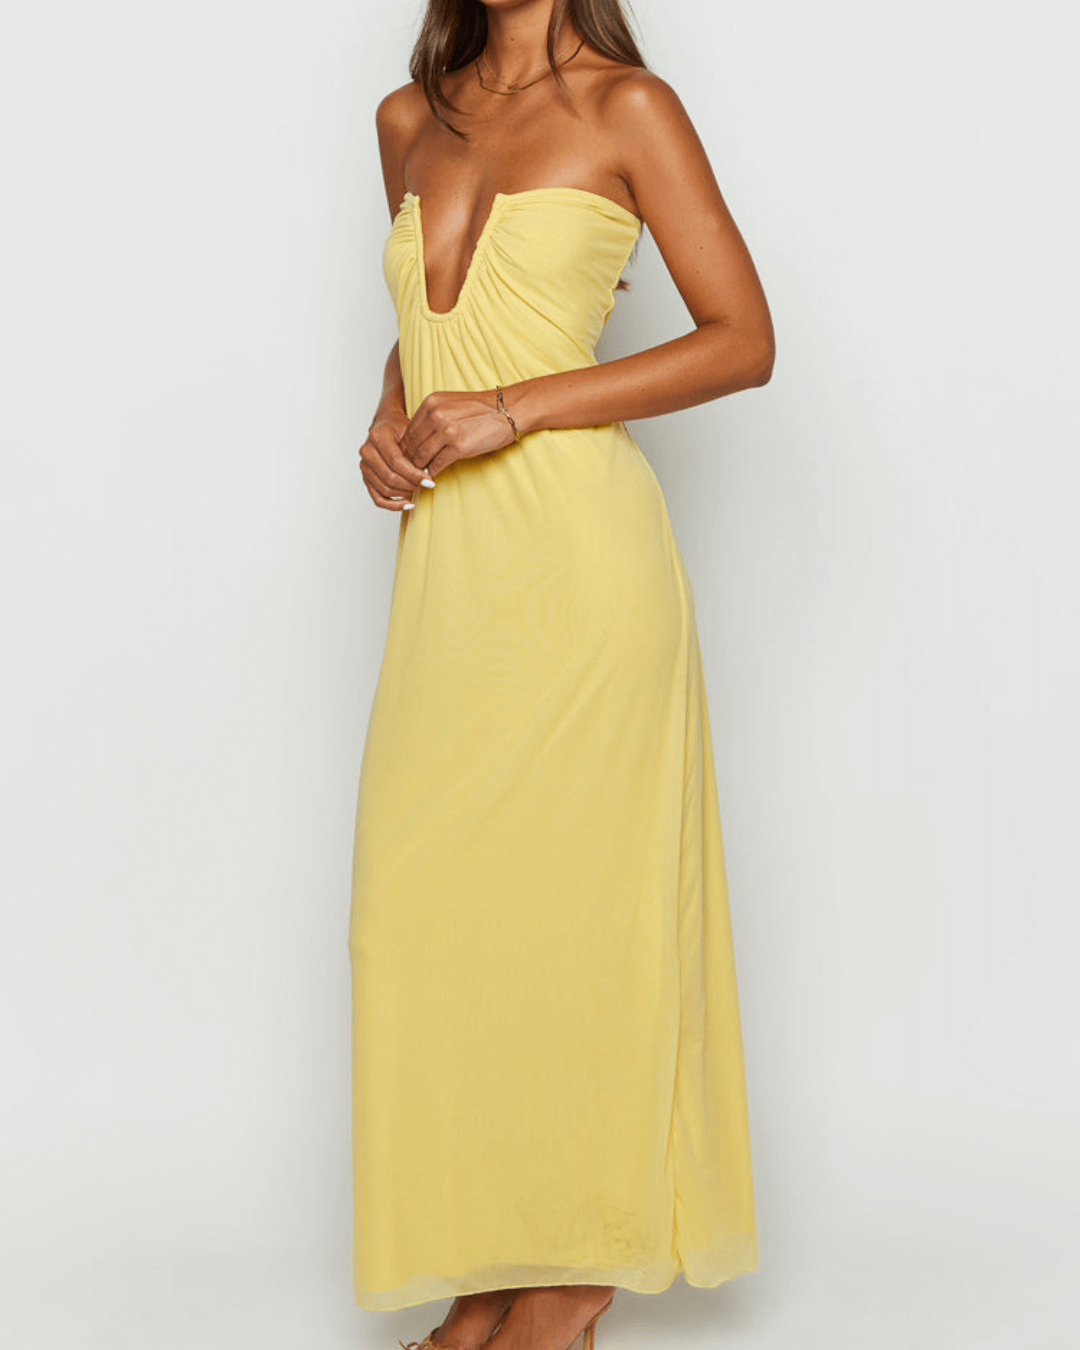 Yellow Strapless Maxi Dress